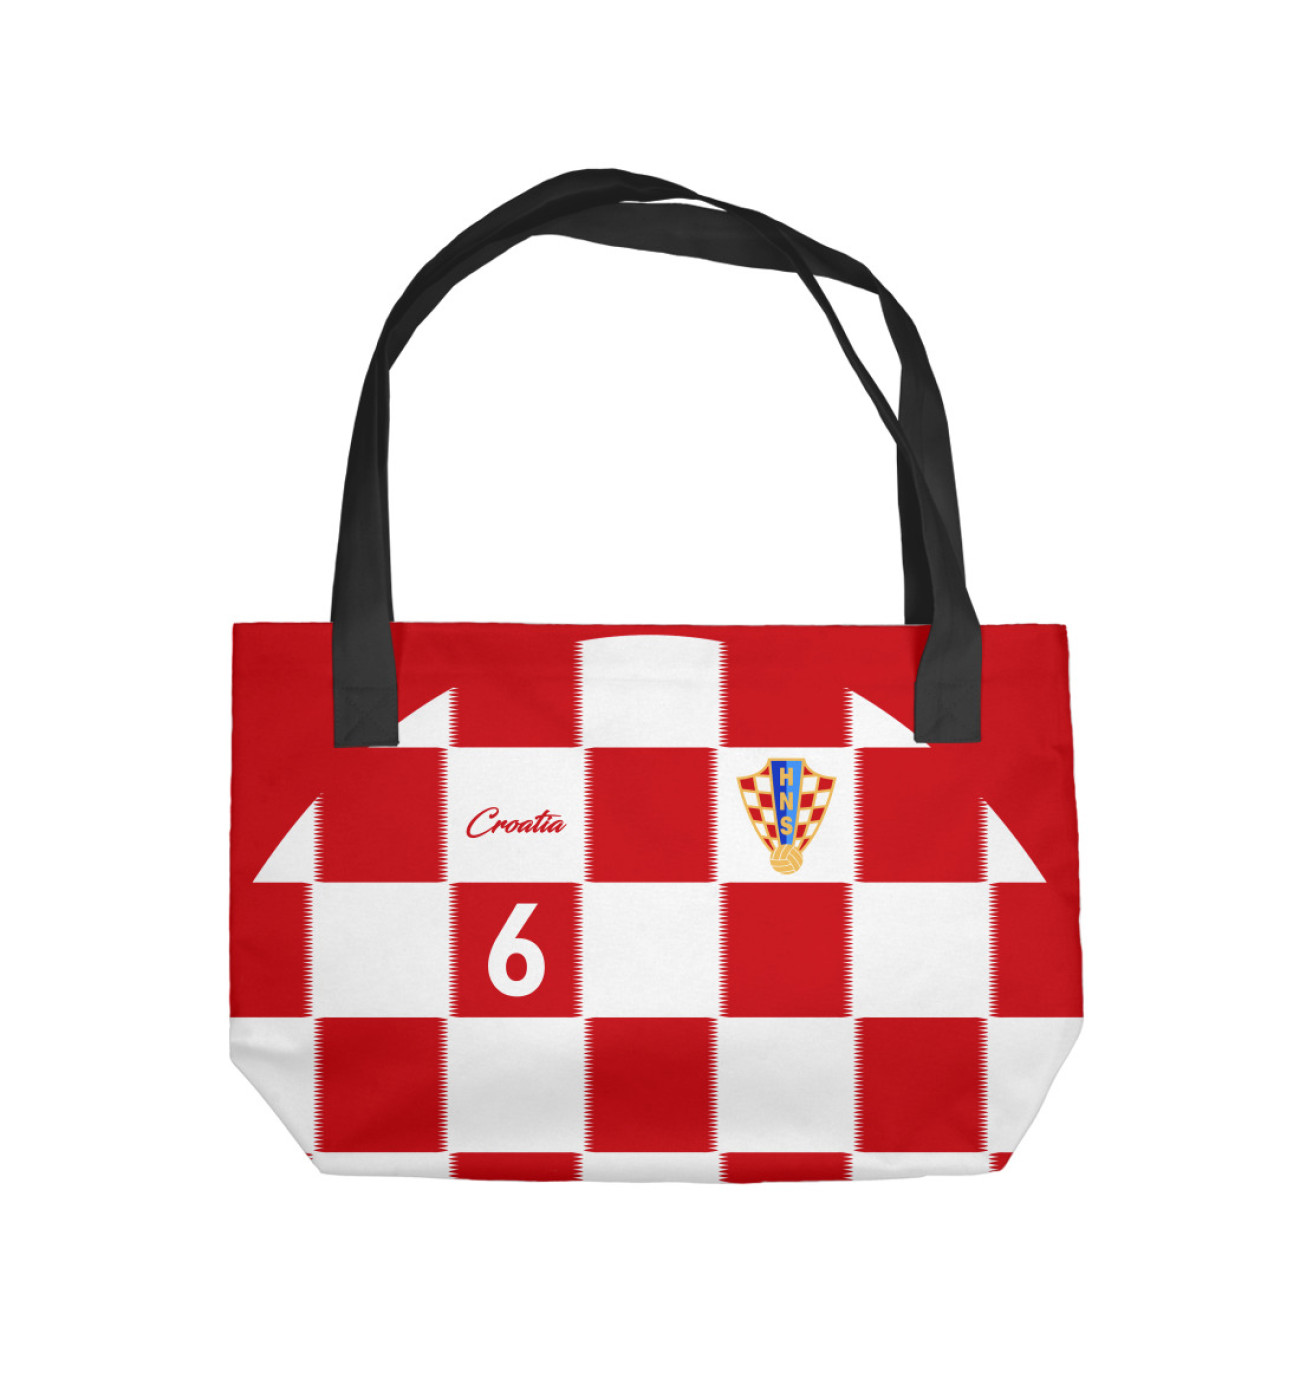 Пляжная сумка Деян Ловрен - Сборная Хорватии, артикул: FLT-142152-sup